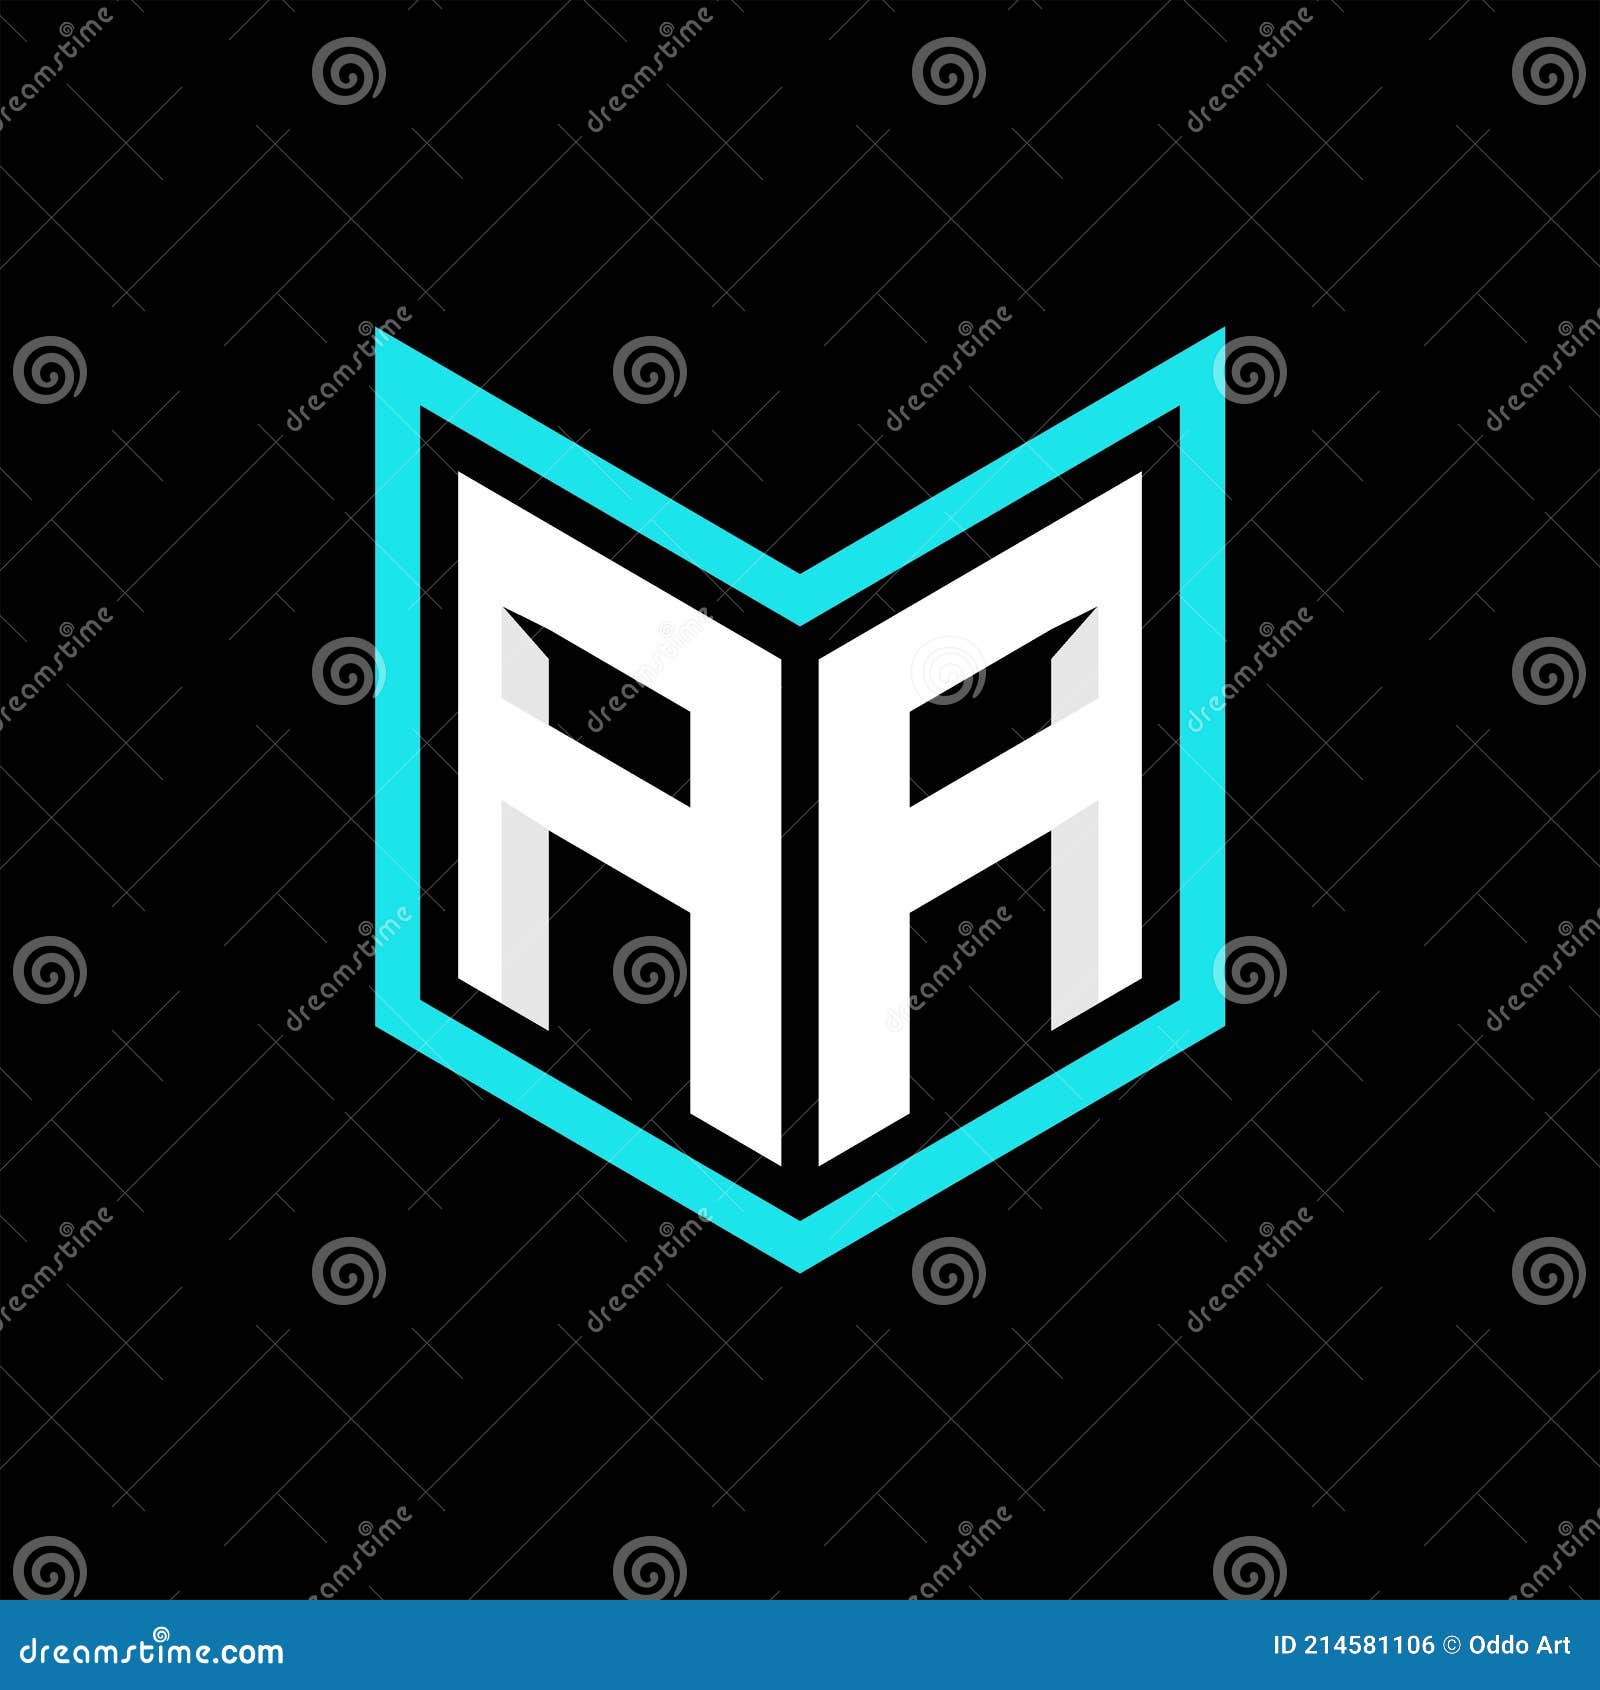 aa initial logo monogram s modern templates